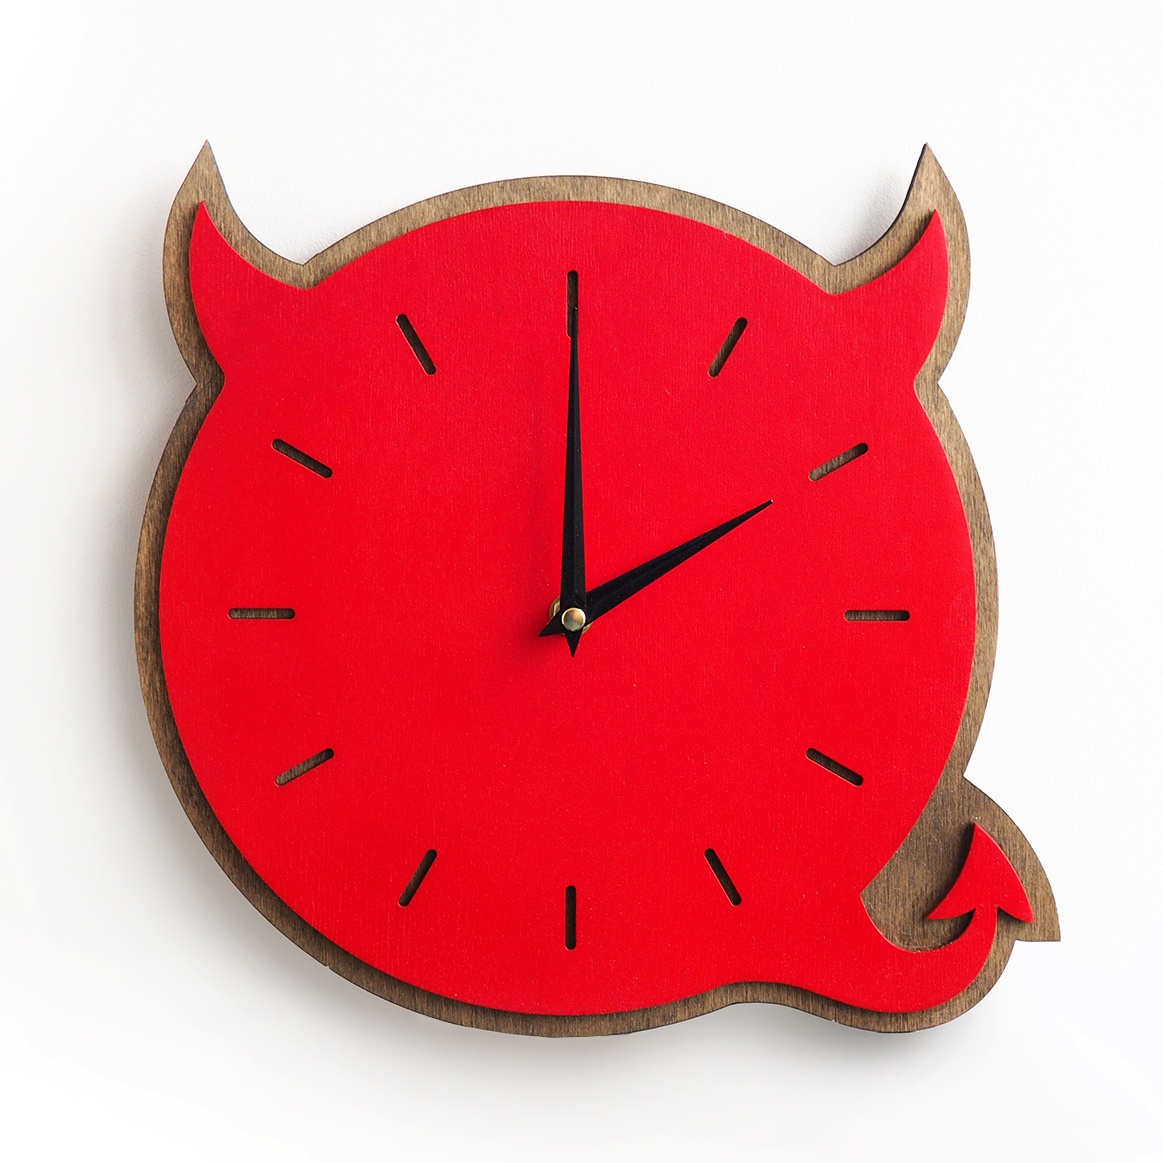 Настенные часы Roomton Diablo, часы на стену красного цвета, красный